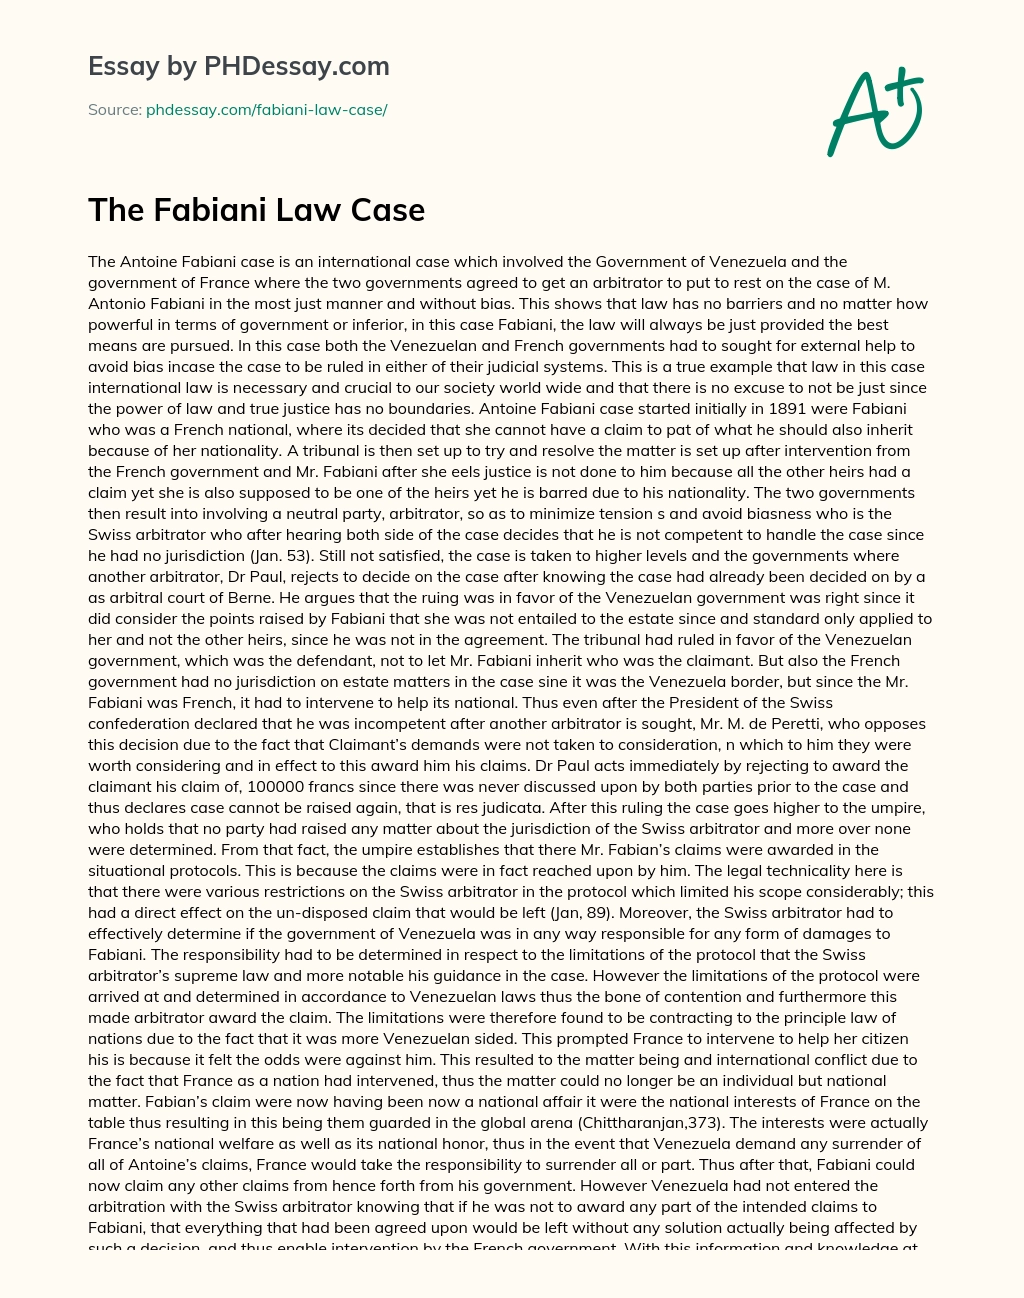 The Fabiani Law Case essay